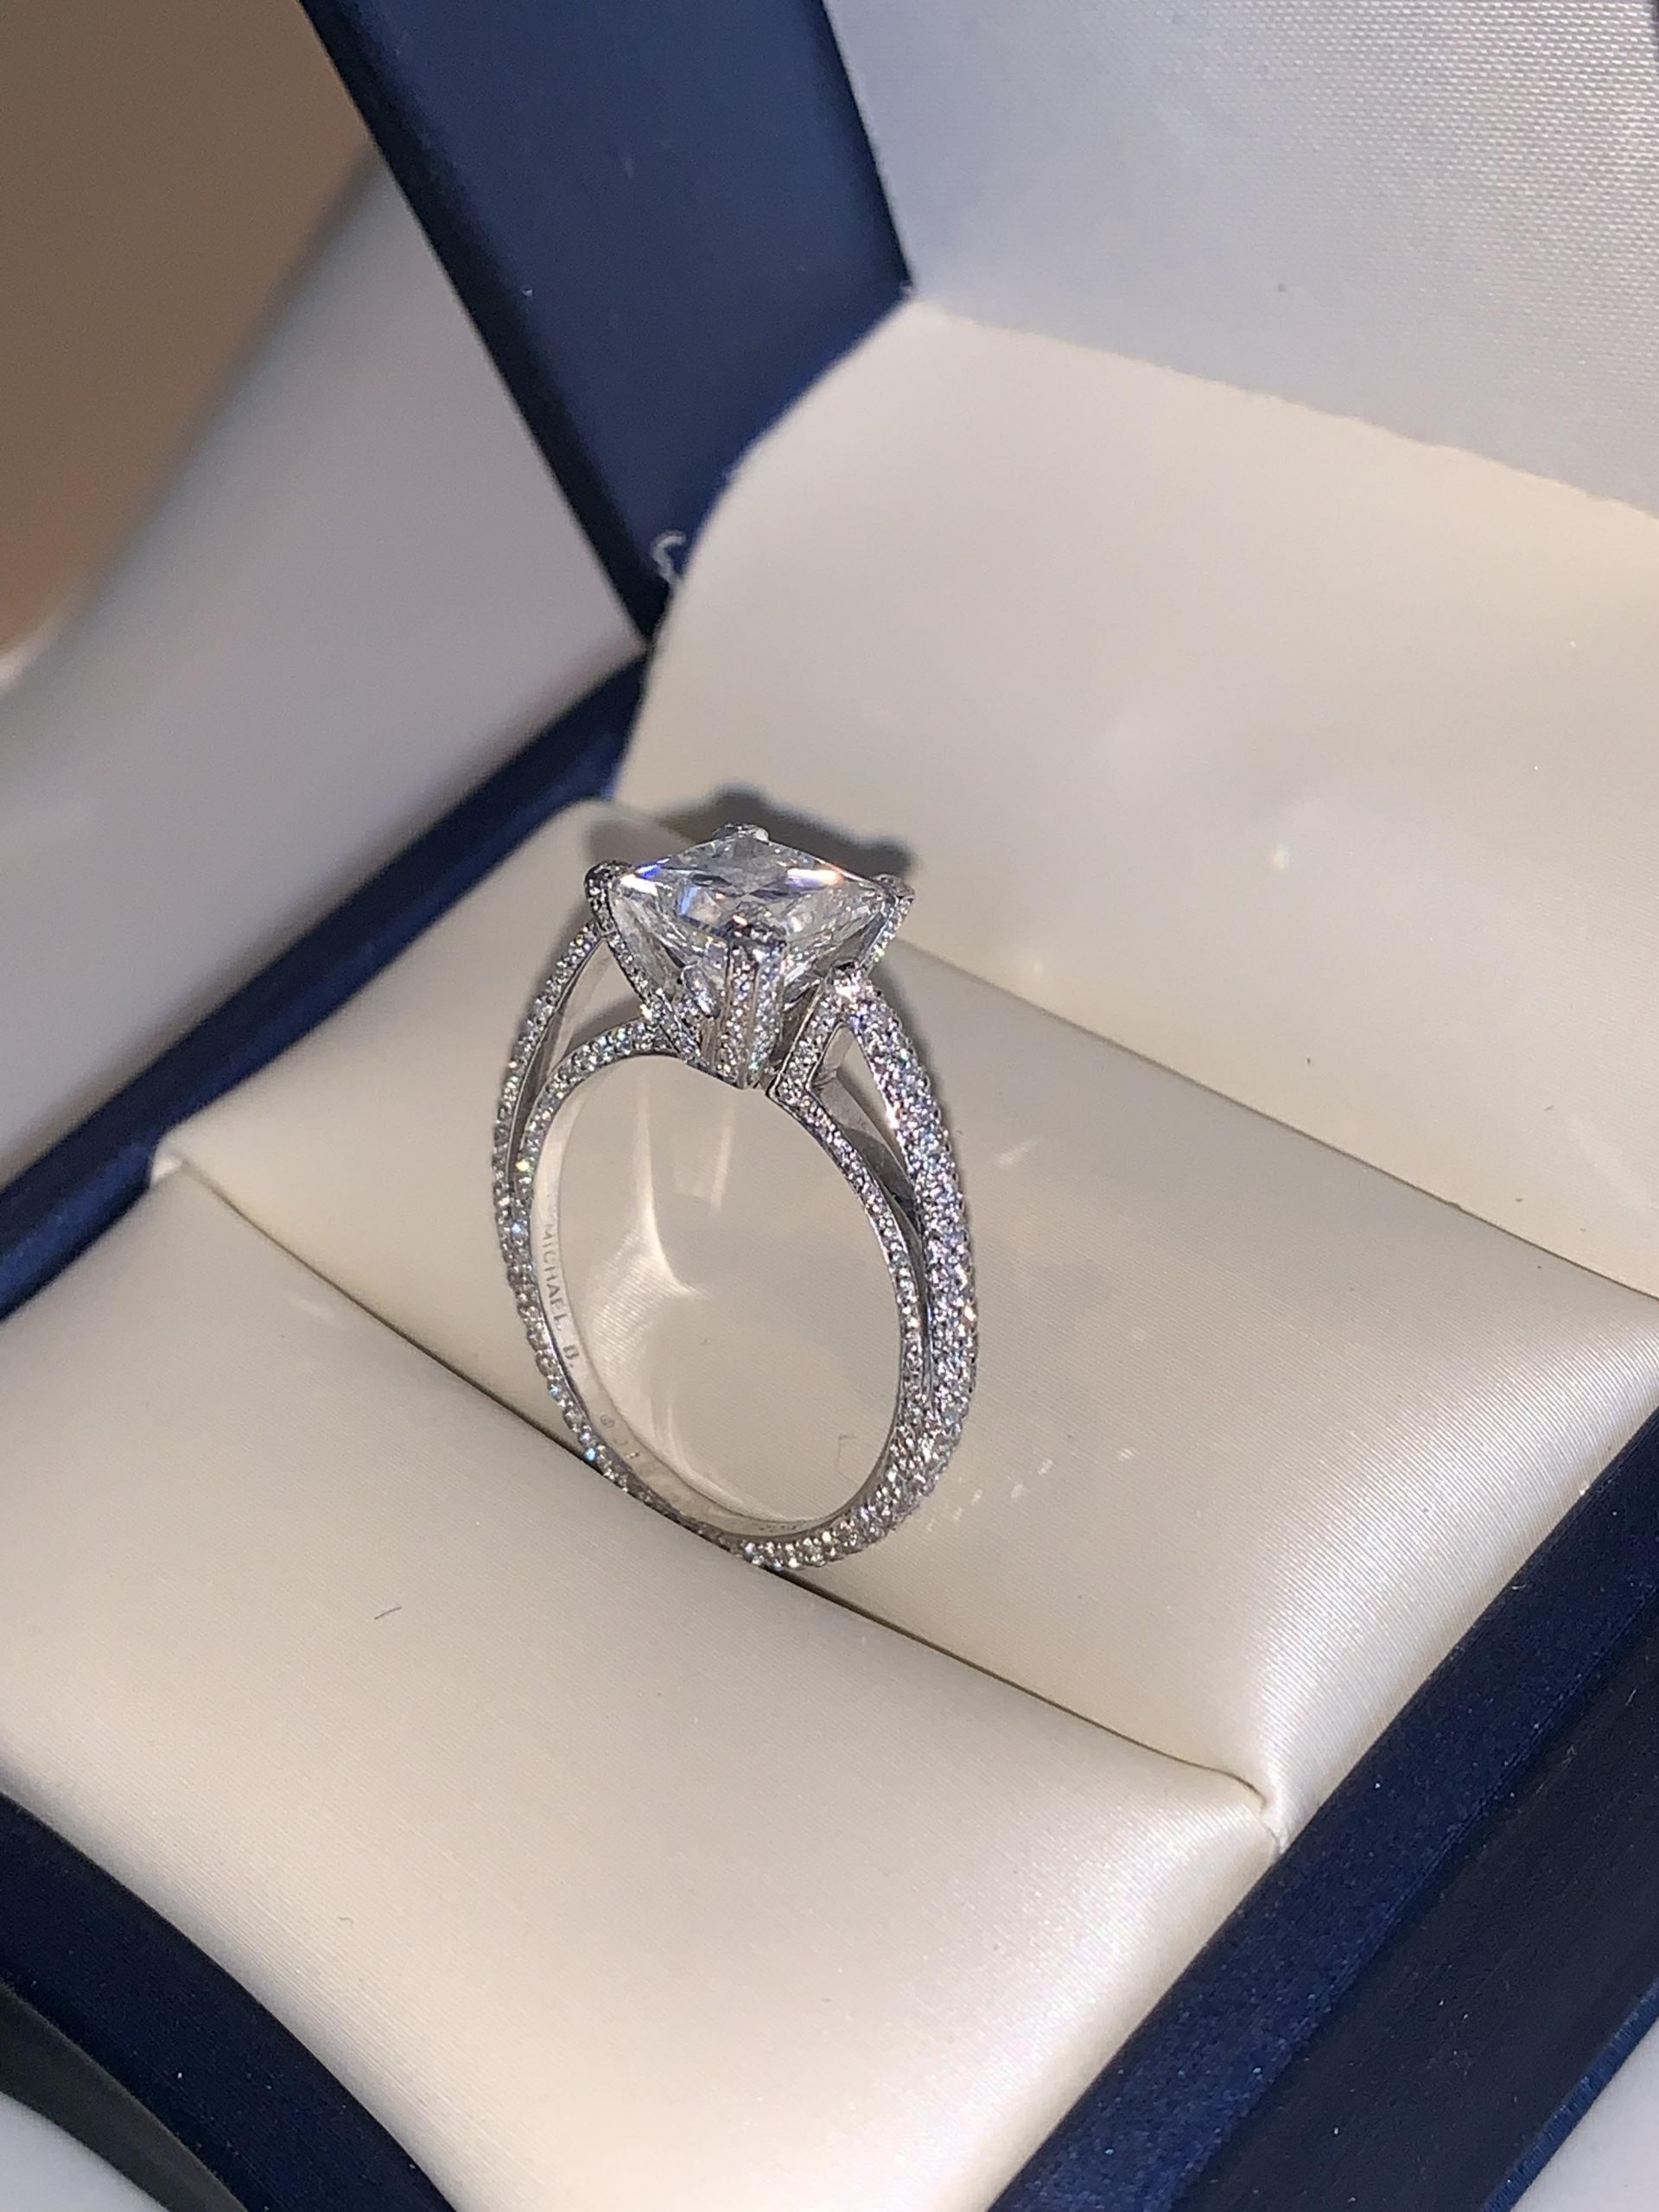 2 Carat Princess Cut Diamond Engagement Ring
 Platinum 2 carat Princess Cut diamond engagement ring